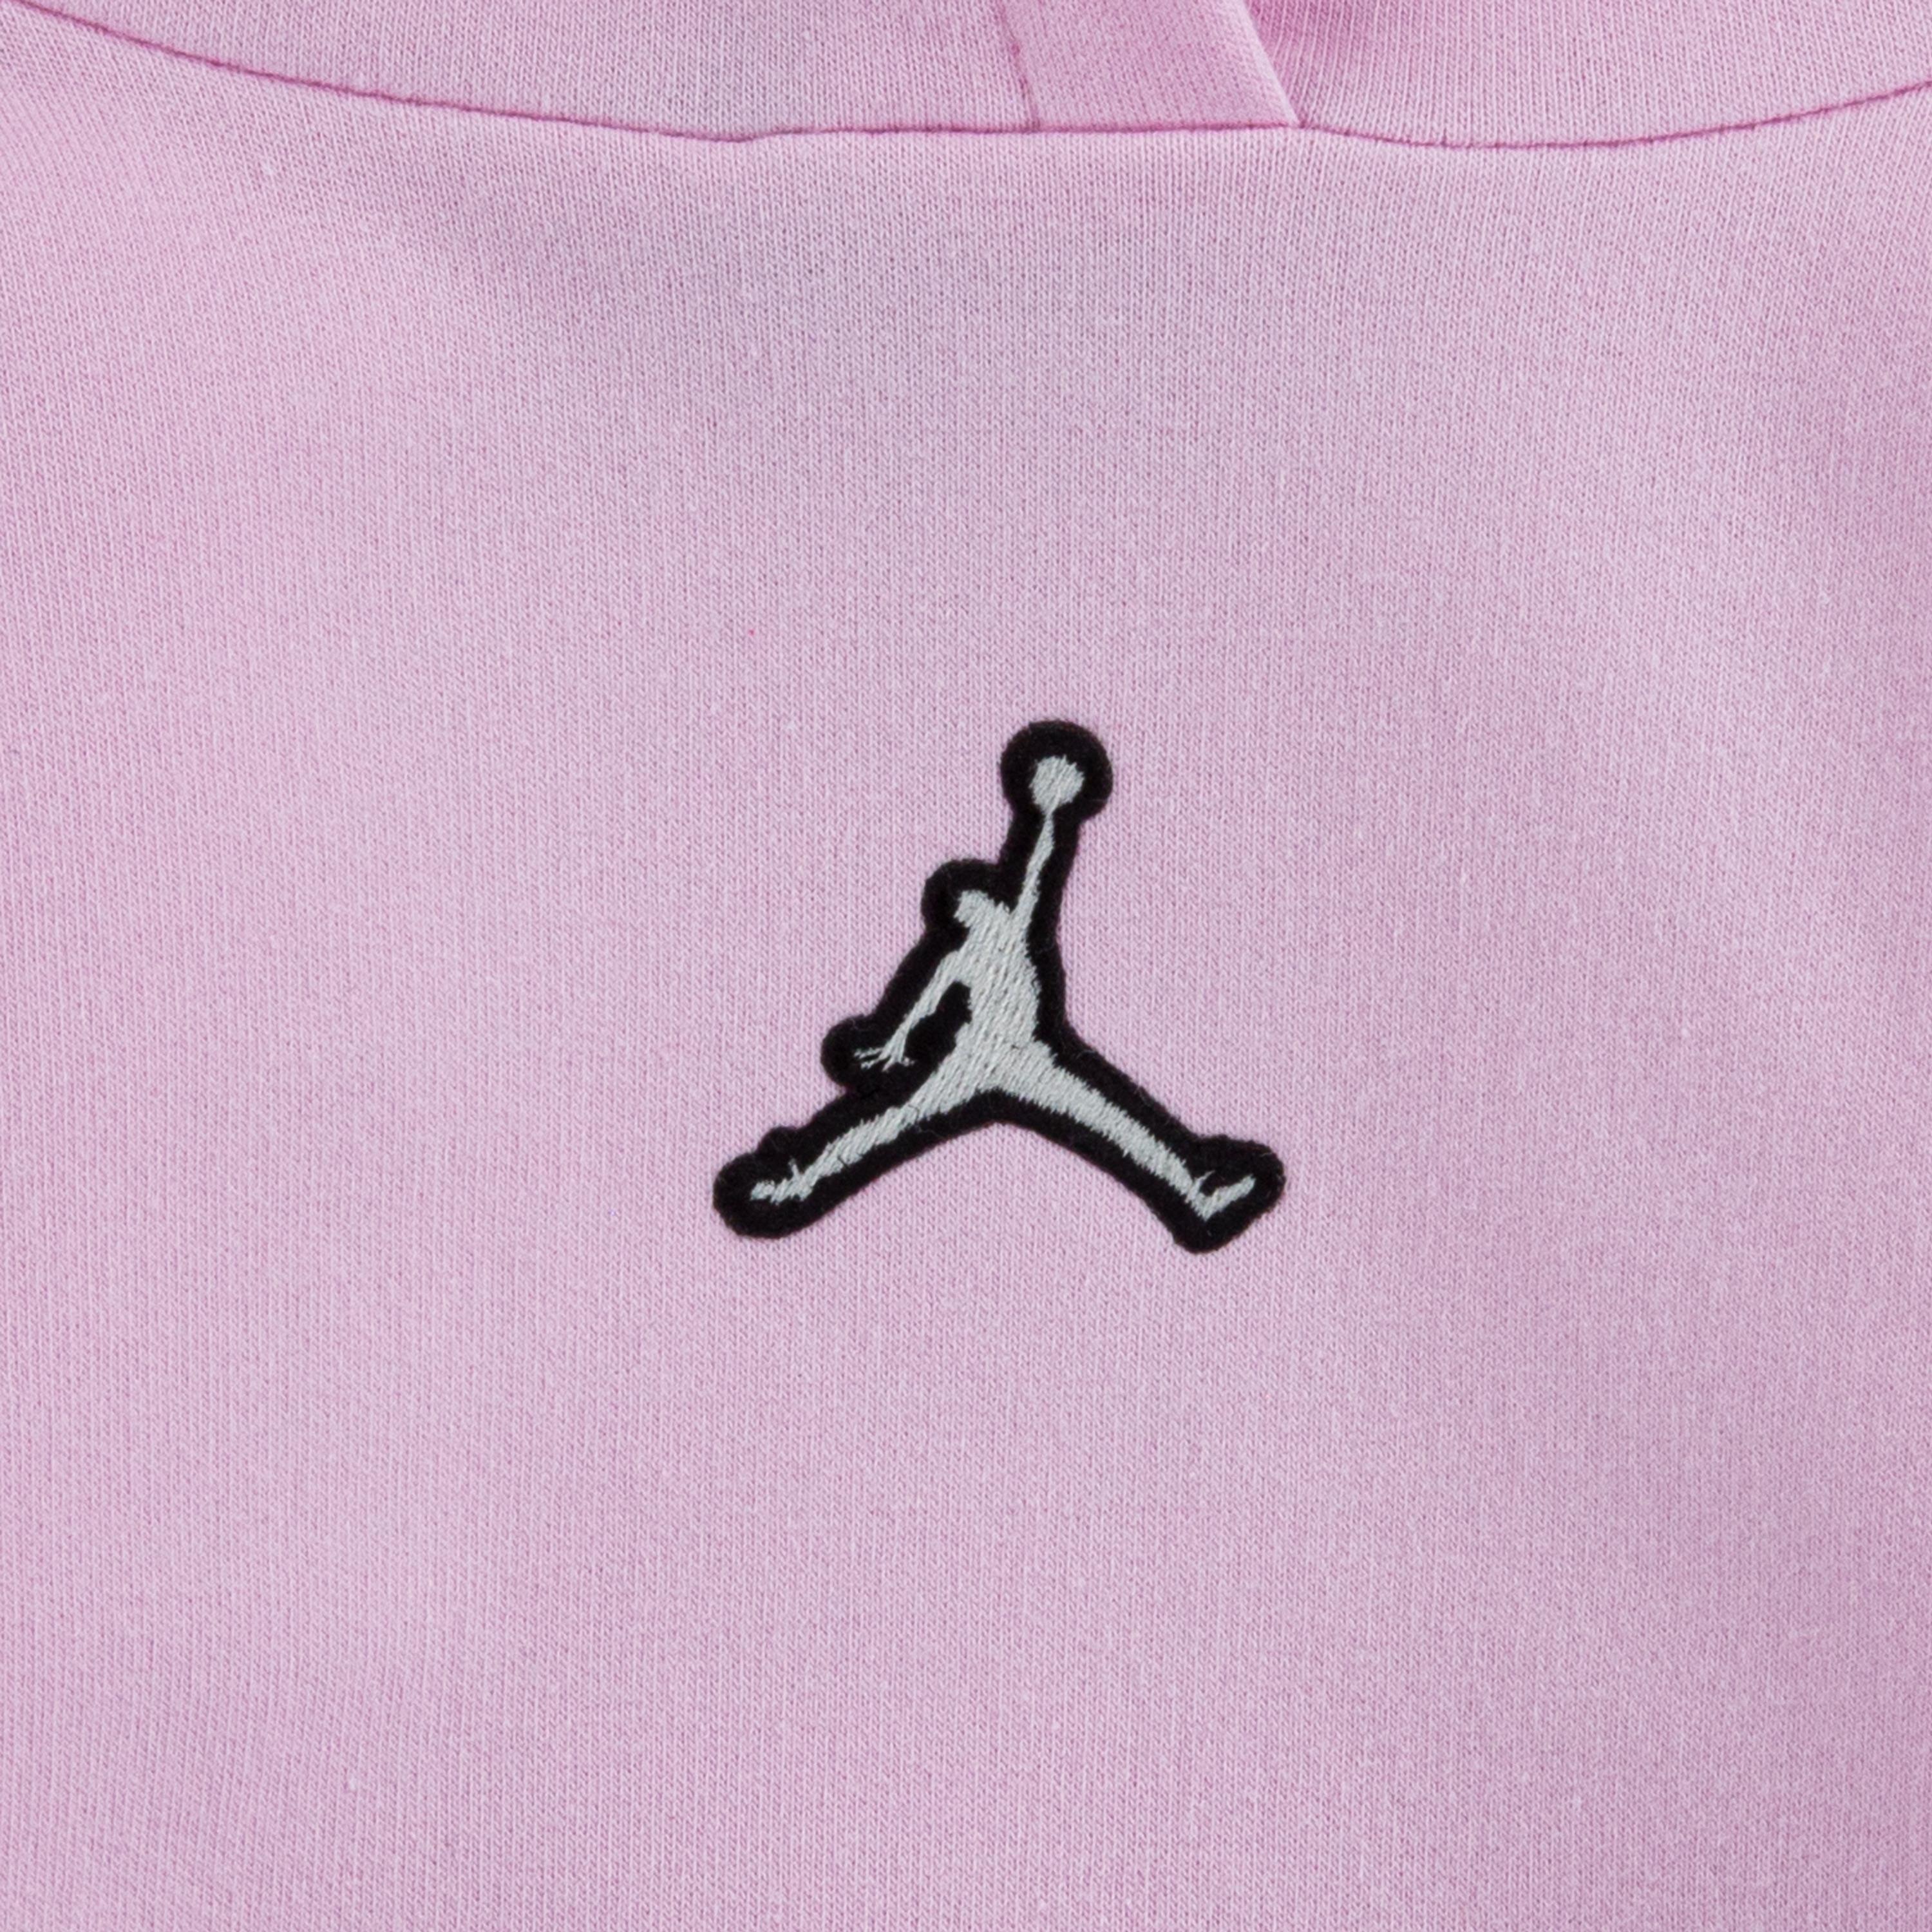 Jordan ESSENTIALS SET - Survêtement - pink foam/rose 